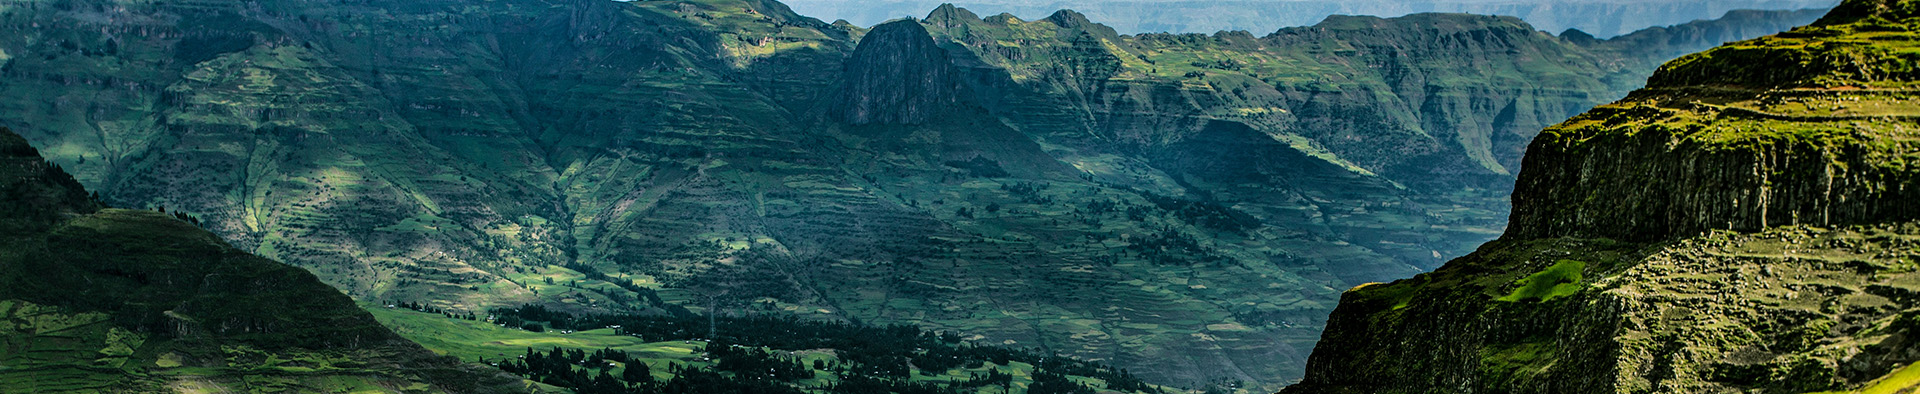 FFD4 Header - Addis Ababa Hills